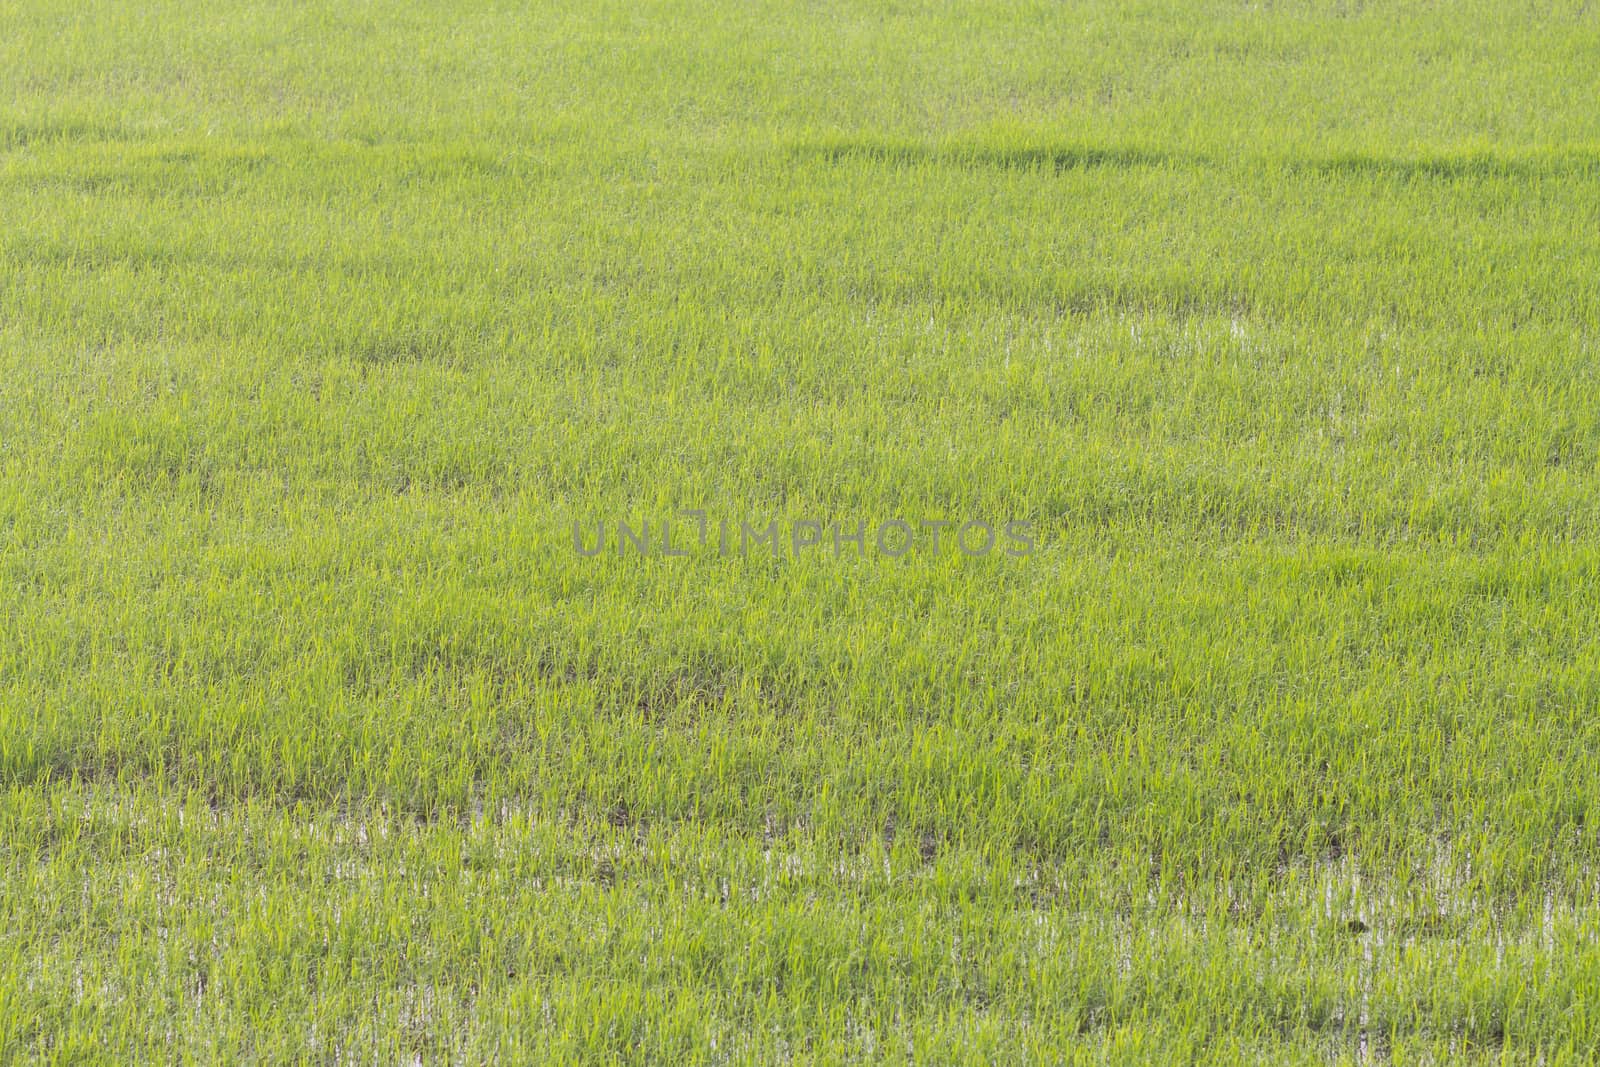 Paddy rice - Rice field